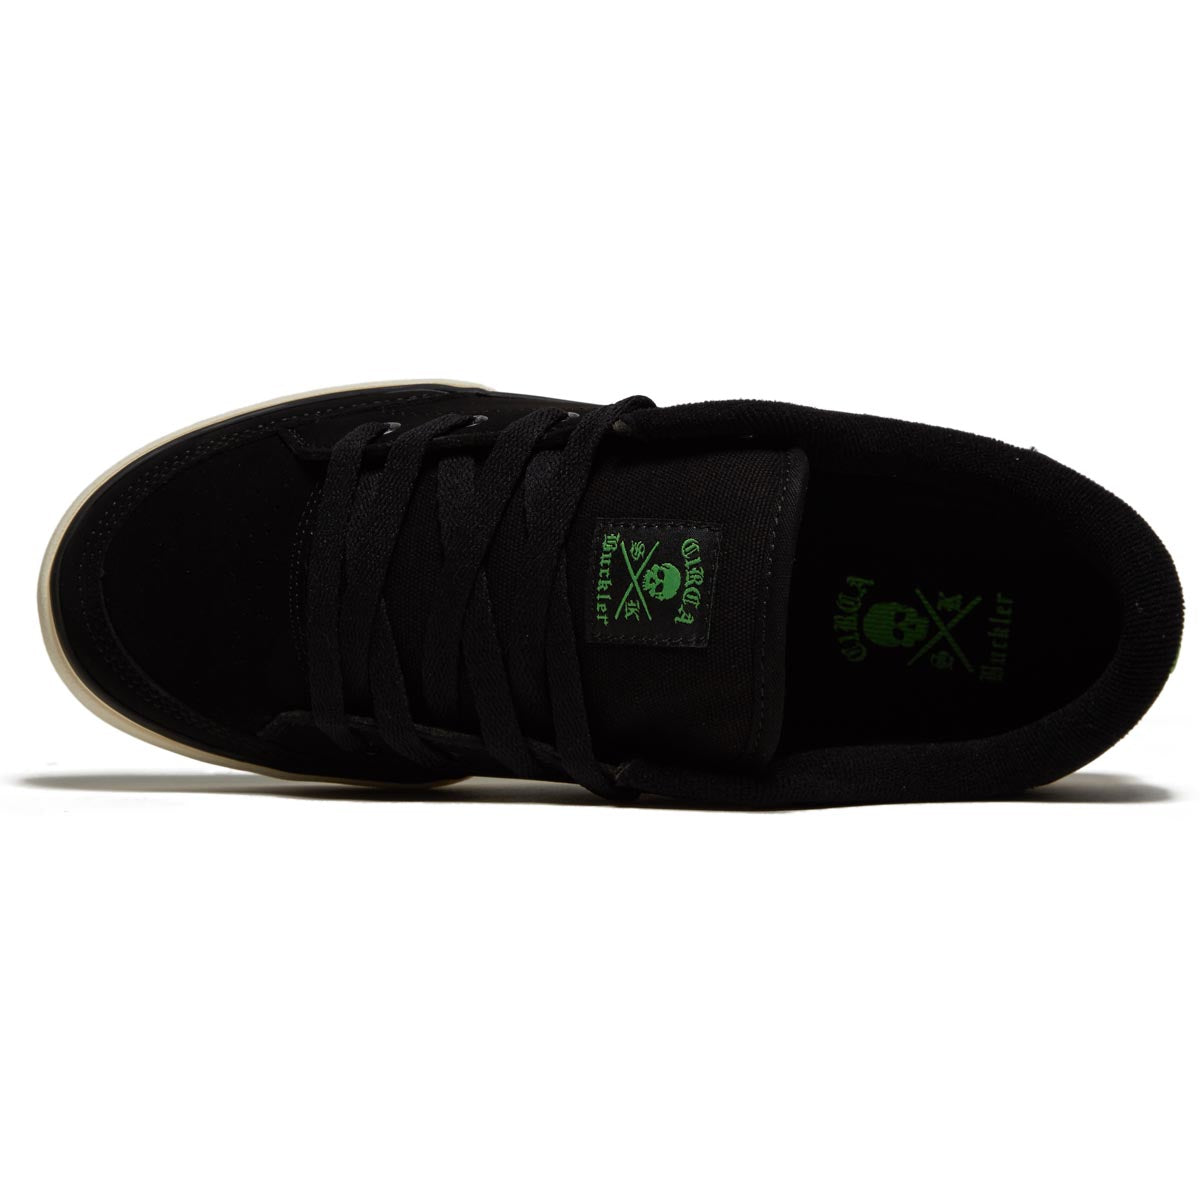 C1rca Buckler Sk Shoes - Black/Fluo Green image 3